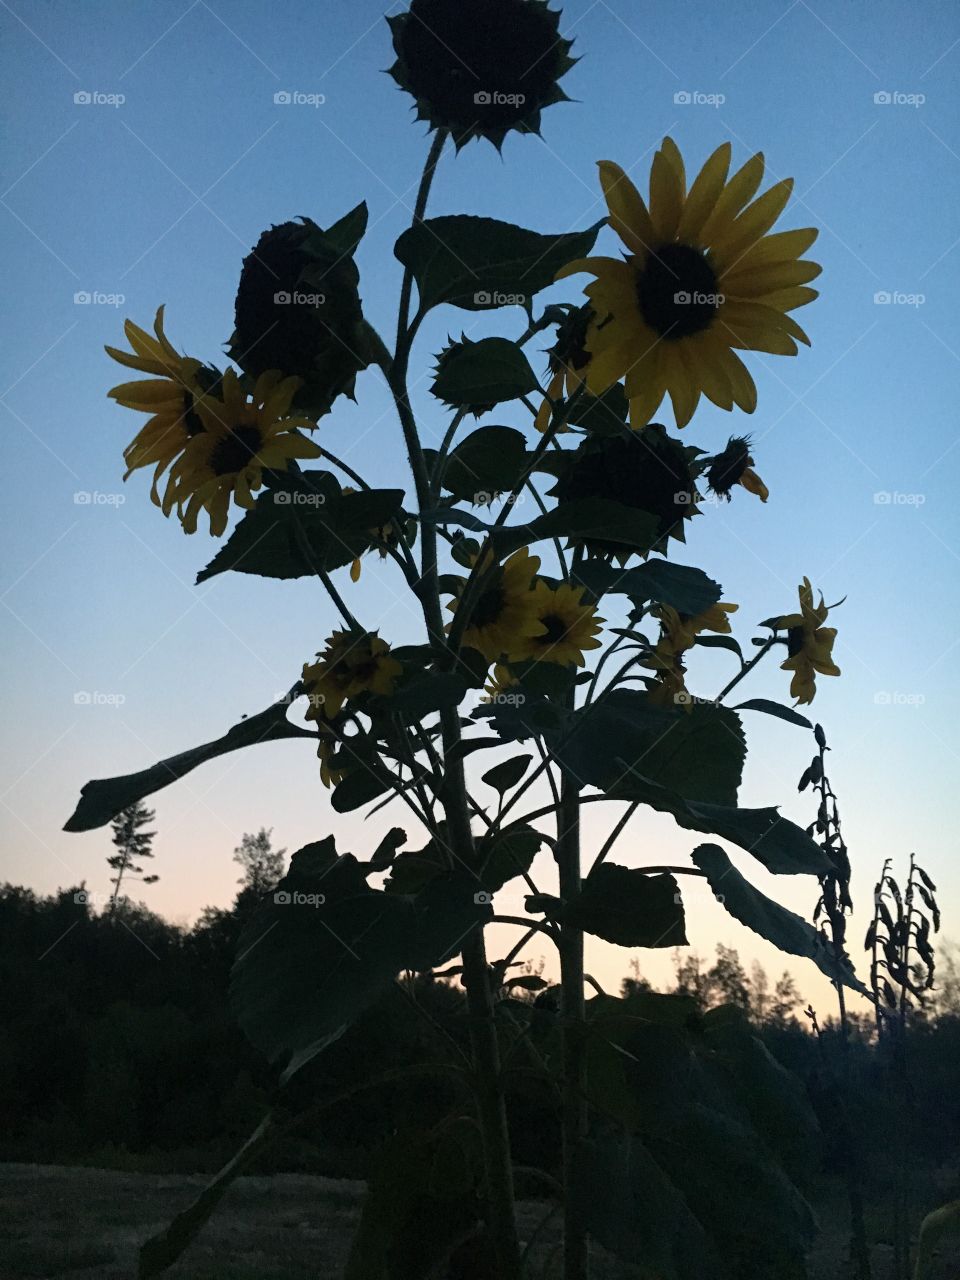 Sunflowers against the setting sun